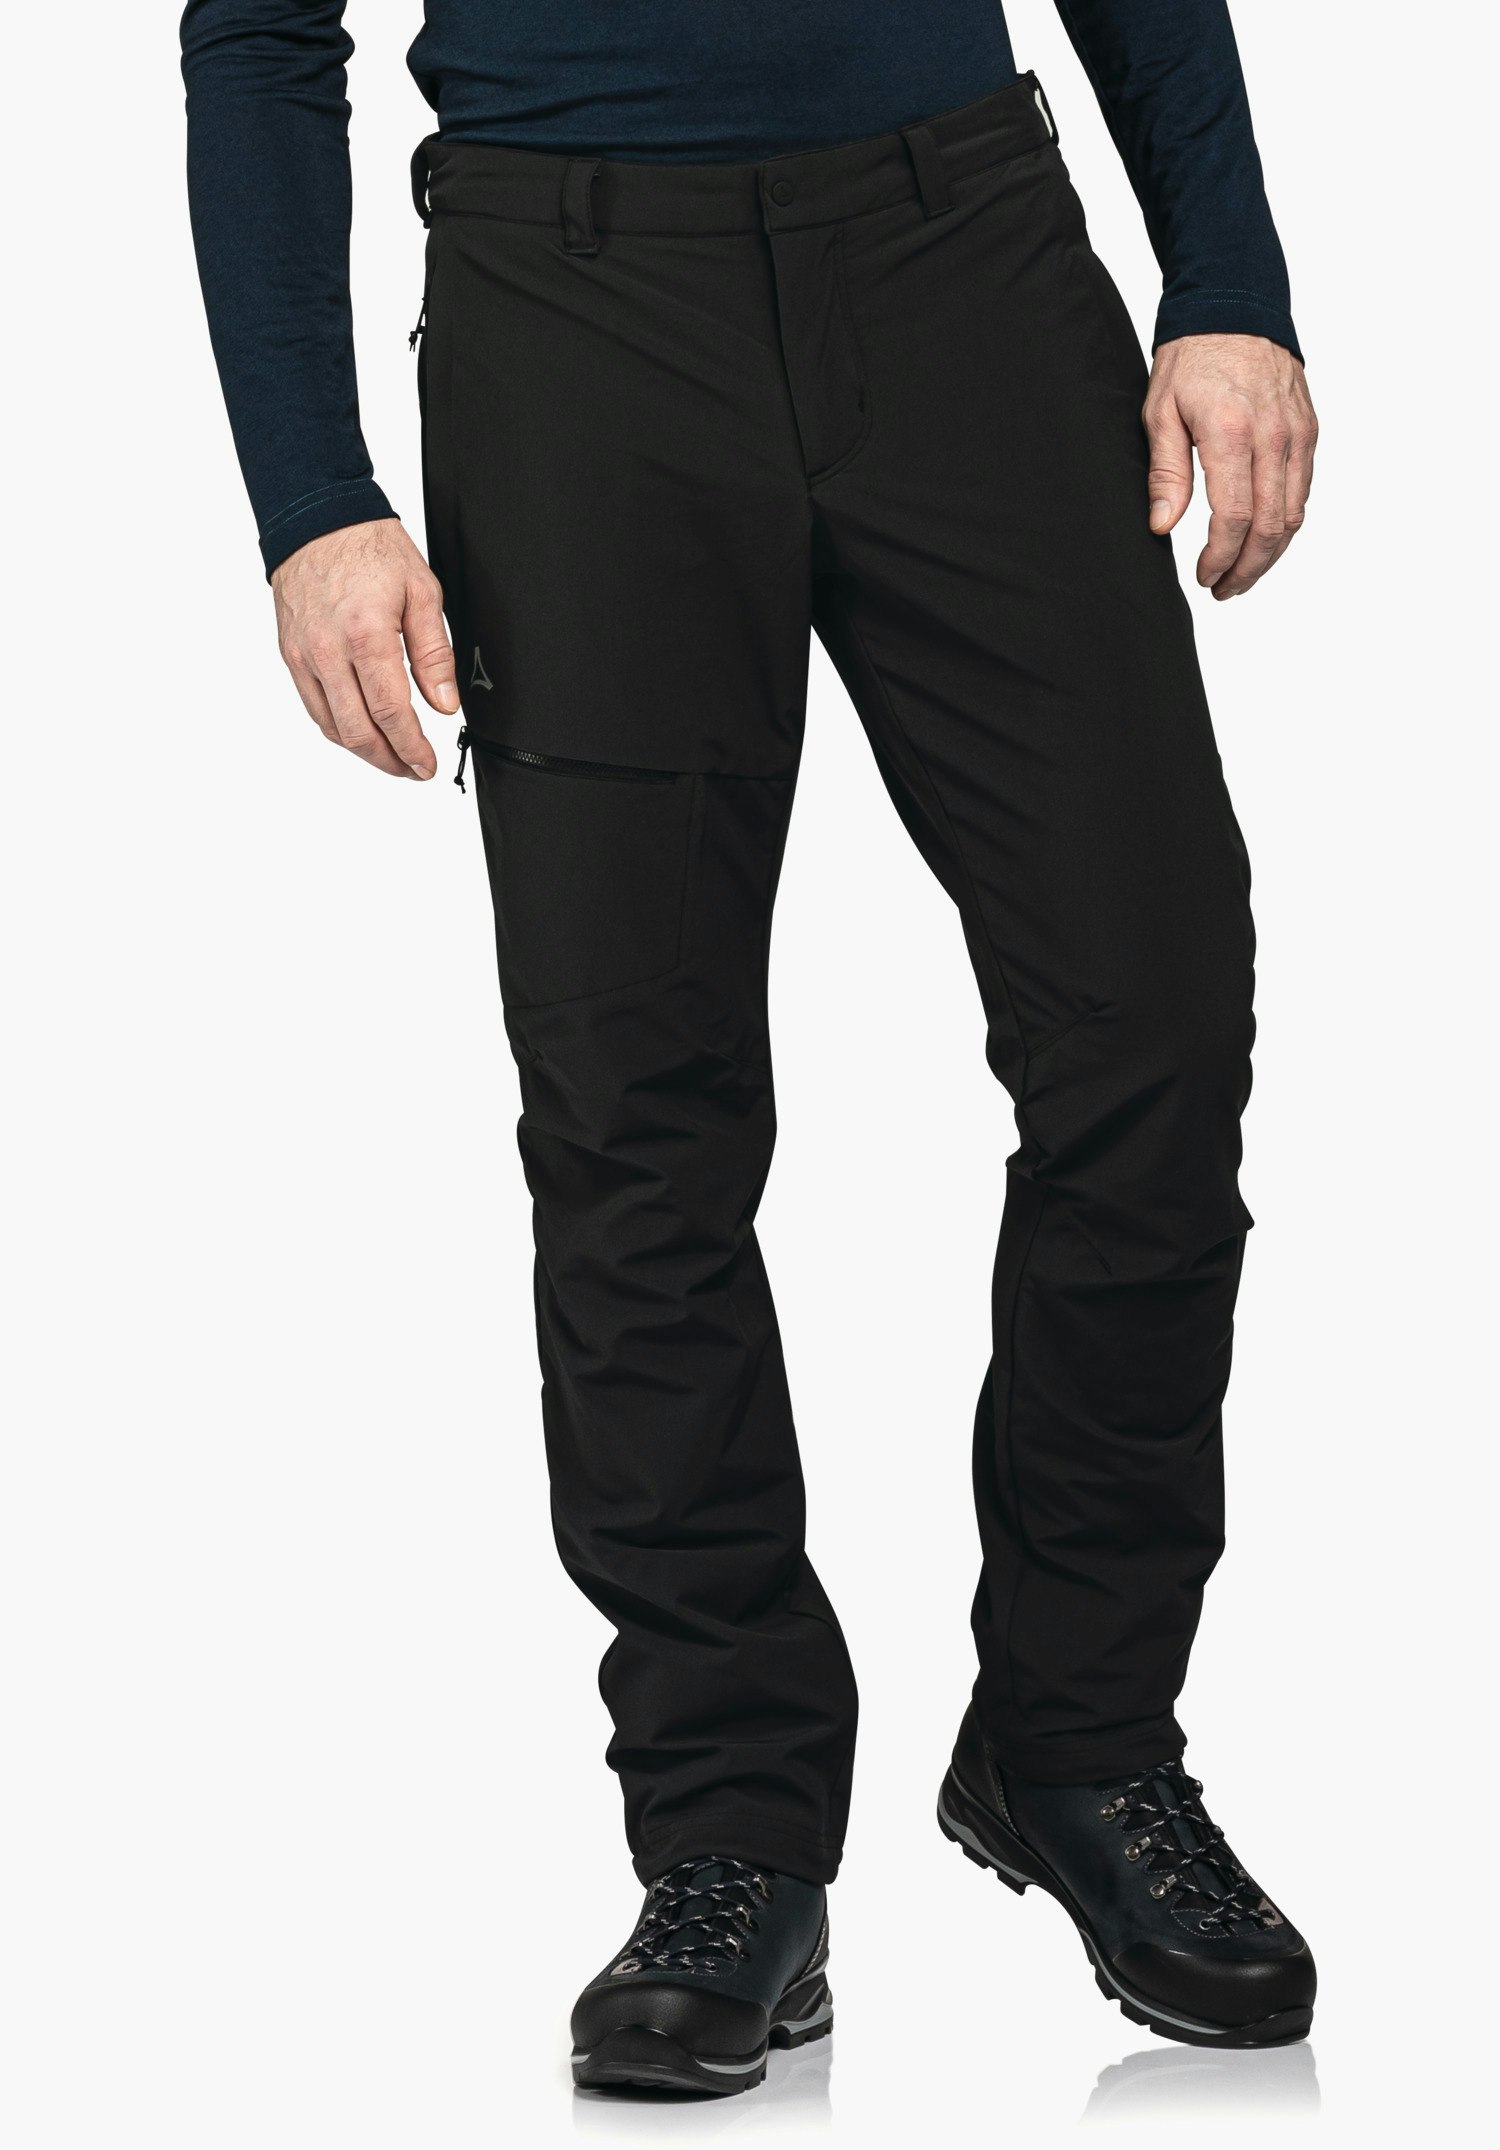 Pants Koper1 Warm M black | Schöffel | Outdoorhosen